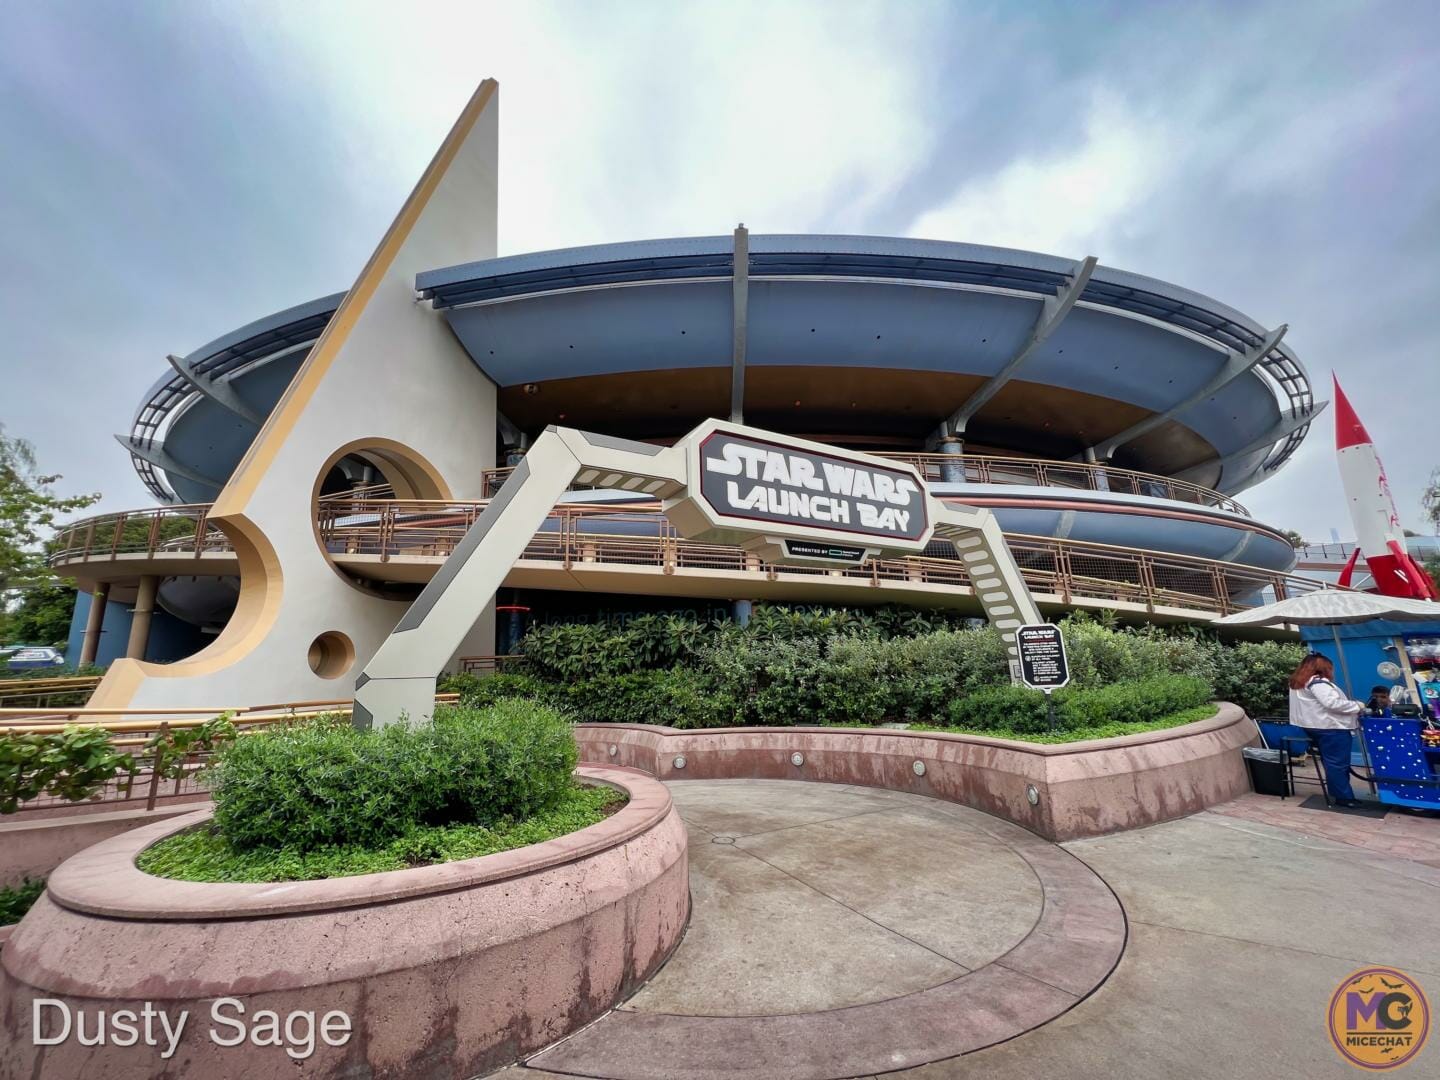 Disneyland Tomorrowland Star Wars Launch Bay Entry-Micechat - Micechat